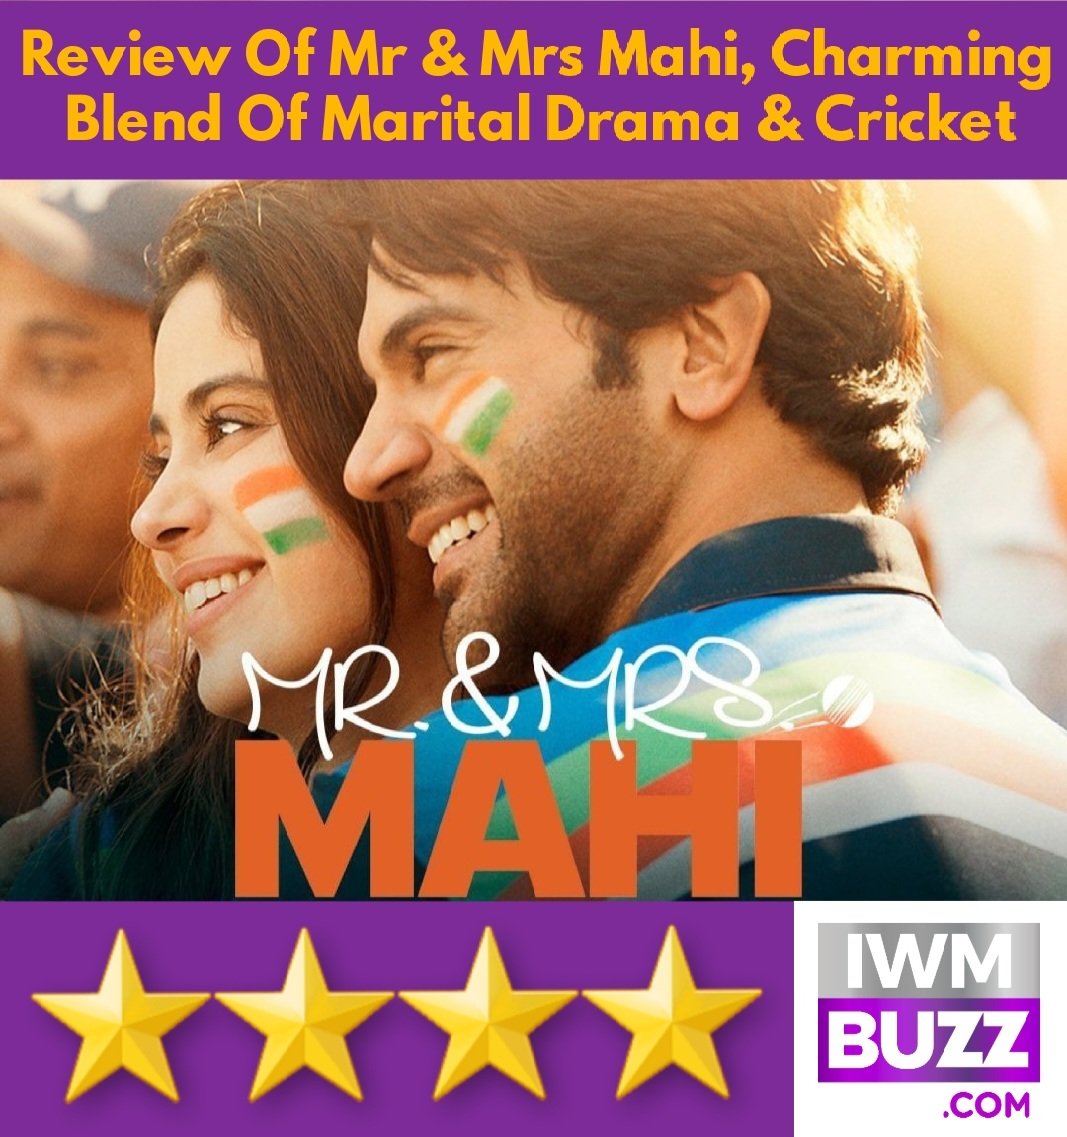 Mr And Mrs Mahi: A Must Watch: 4 Stars From IWMBuzz.com #MrAndMrsMahi #JanhviKapoor #RajkummarRao #sharansharma #KaranJohar #bollywood #movie #review #iwmbuzz @DharmaMovies @RajkummarRao